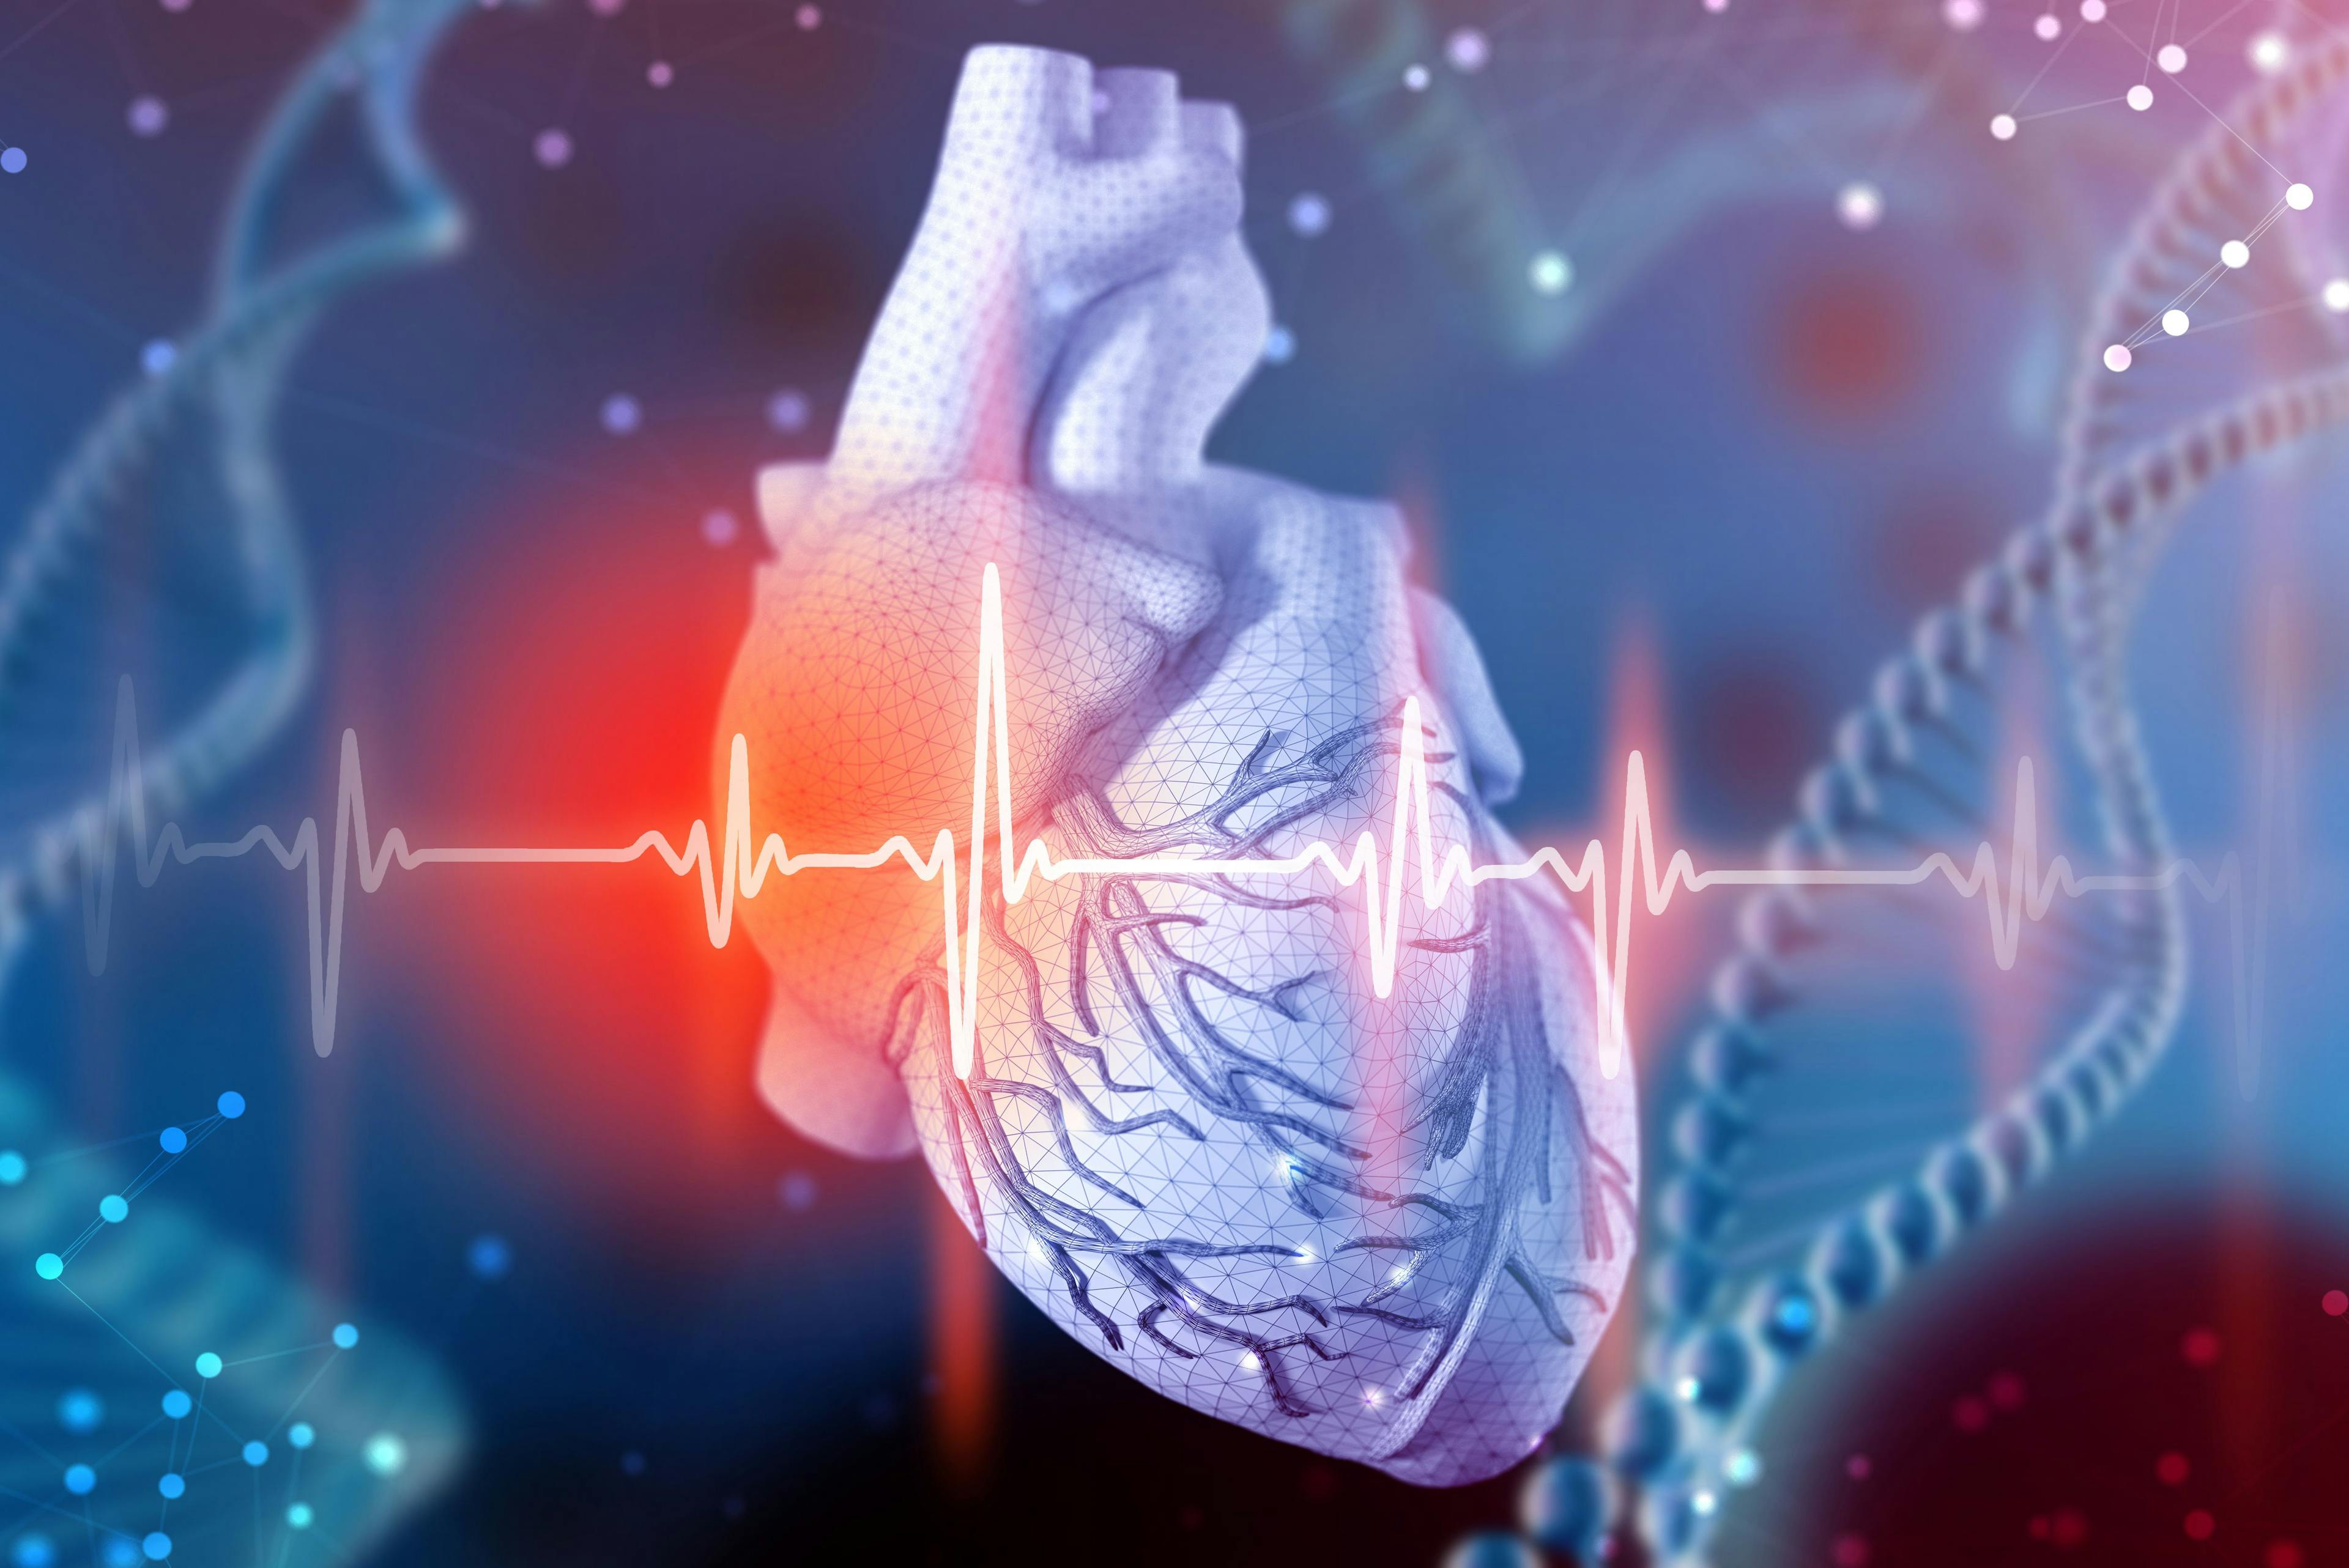 Cardiovascular system | Image Credit: Artem - stock.adobe.com